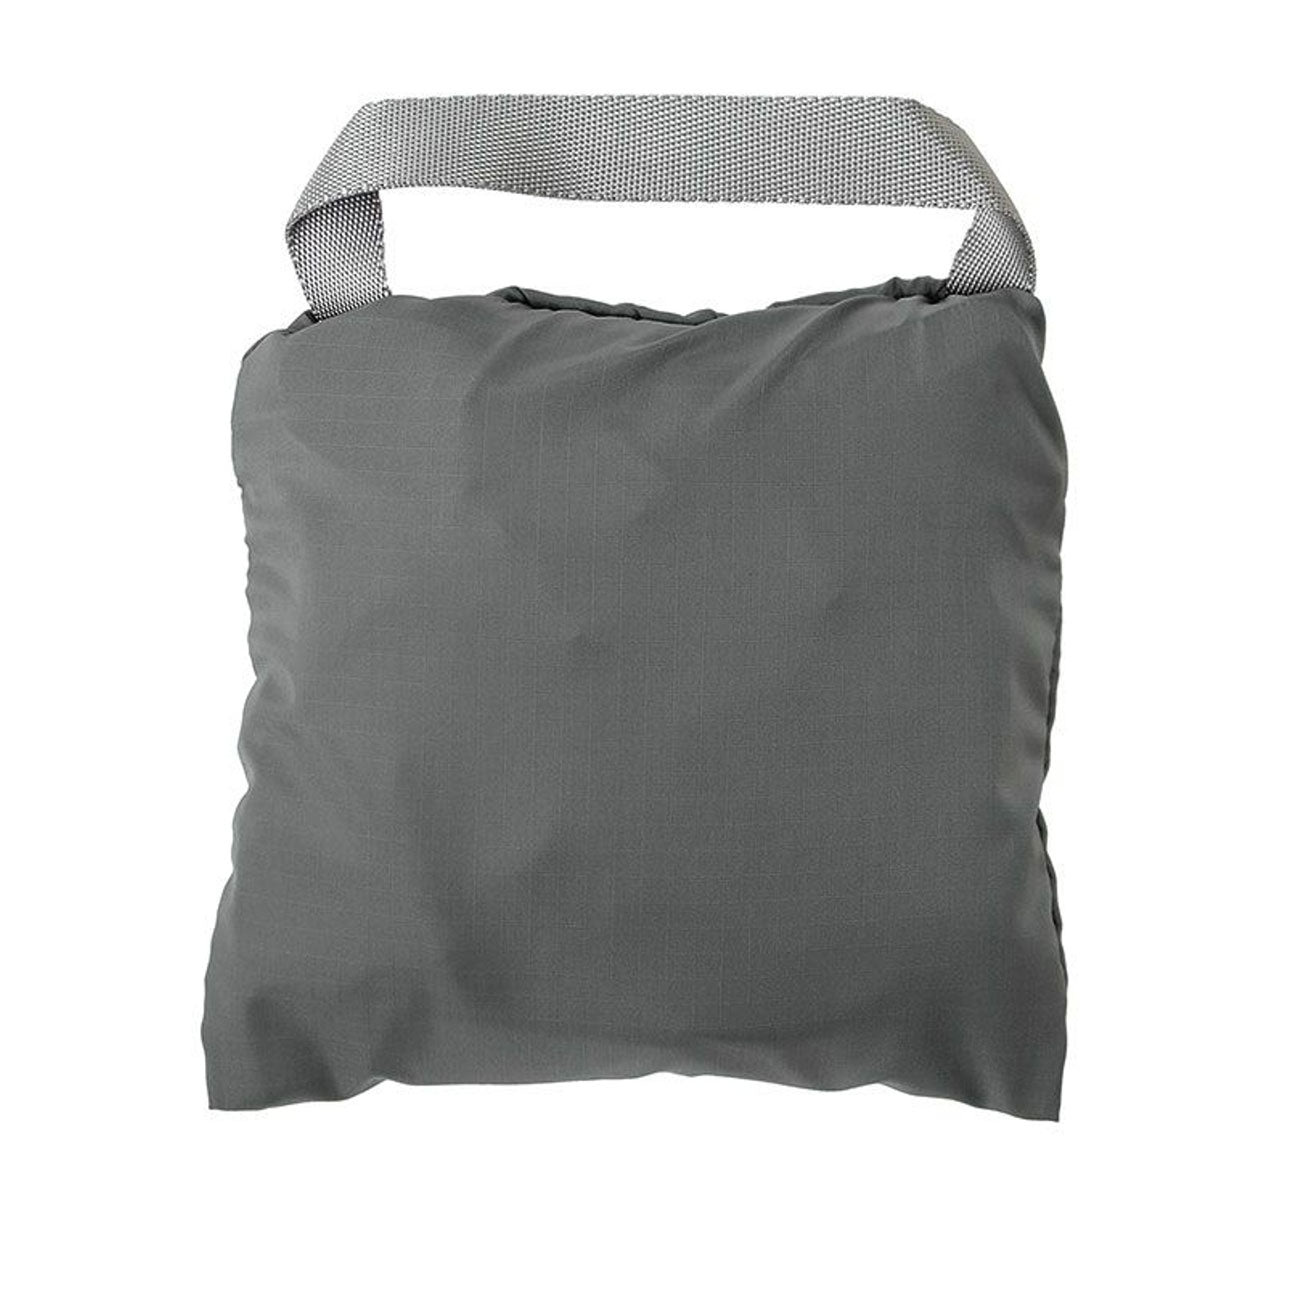 porter-yoshida & co. flex 2 way tote bag (grey)